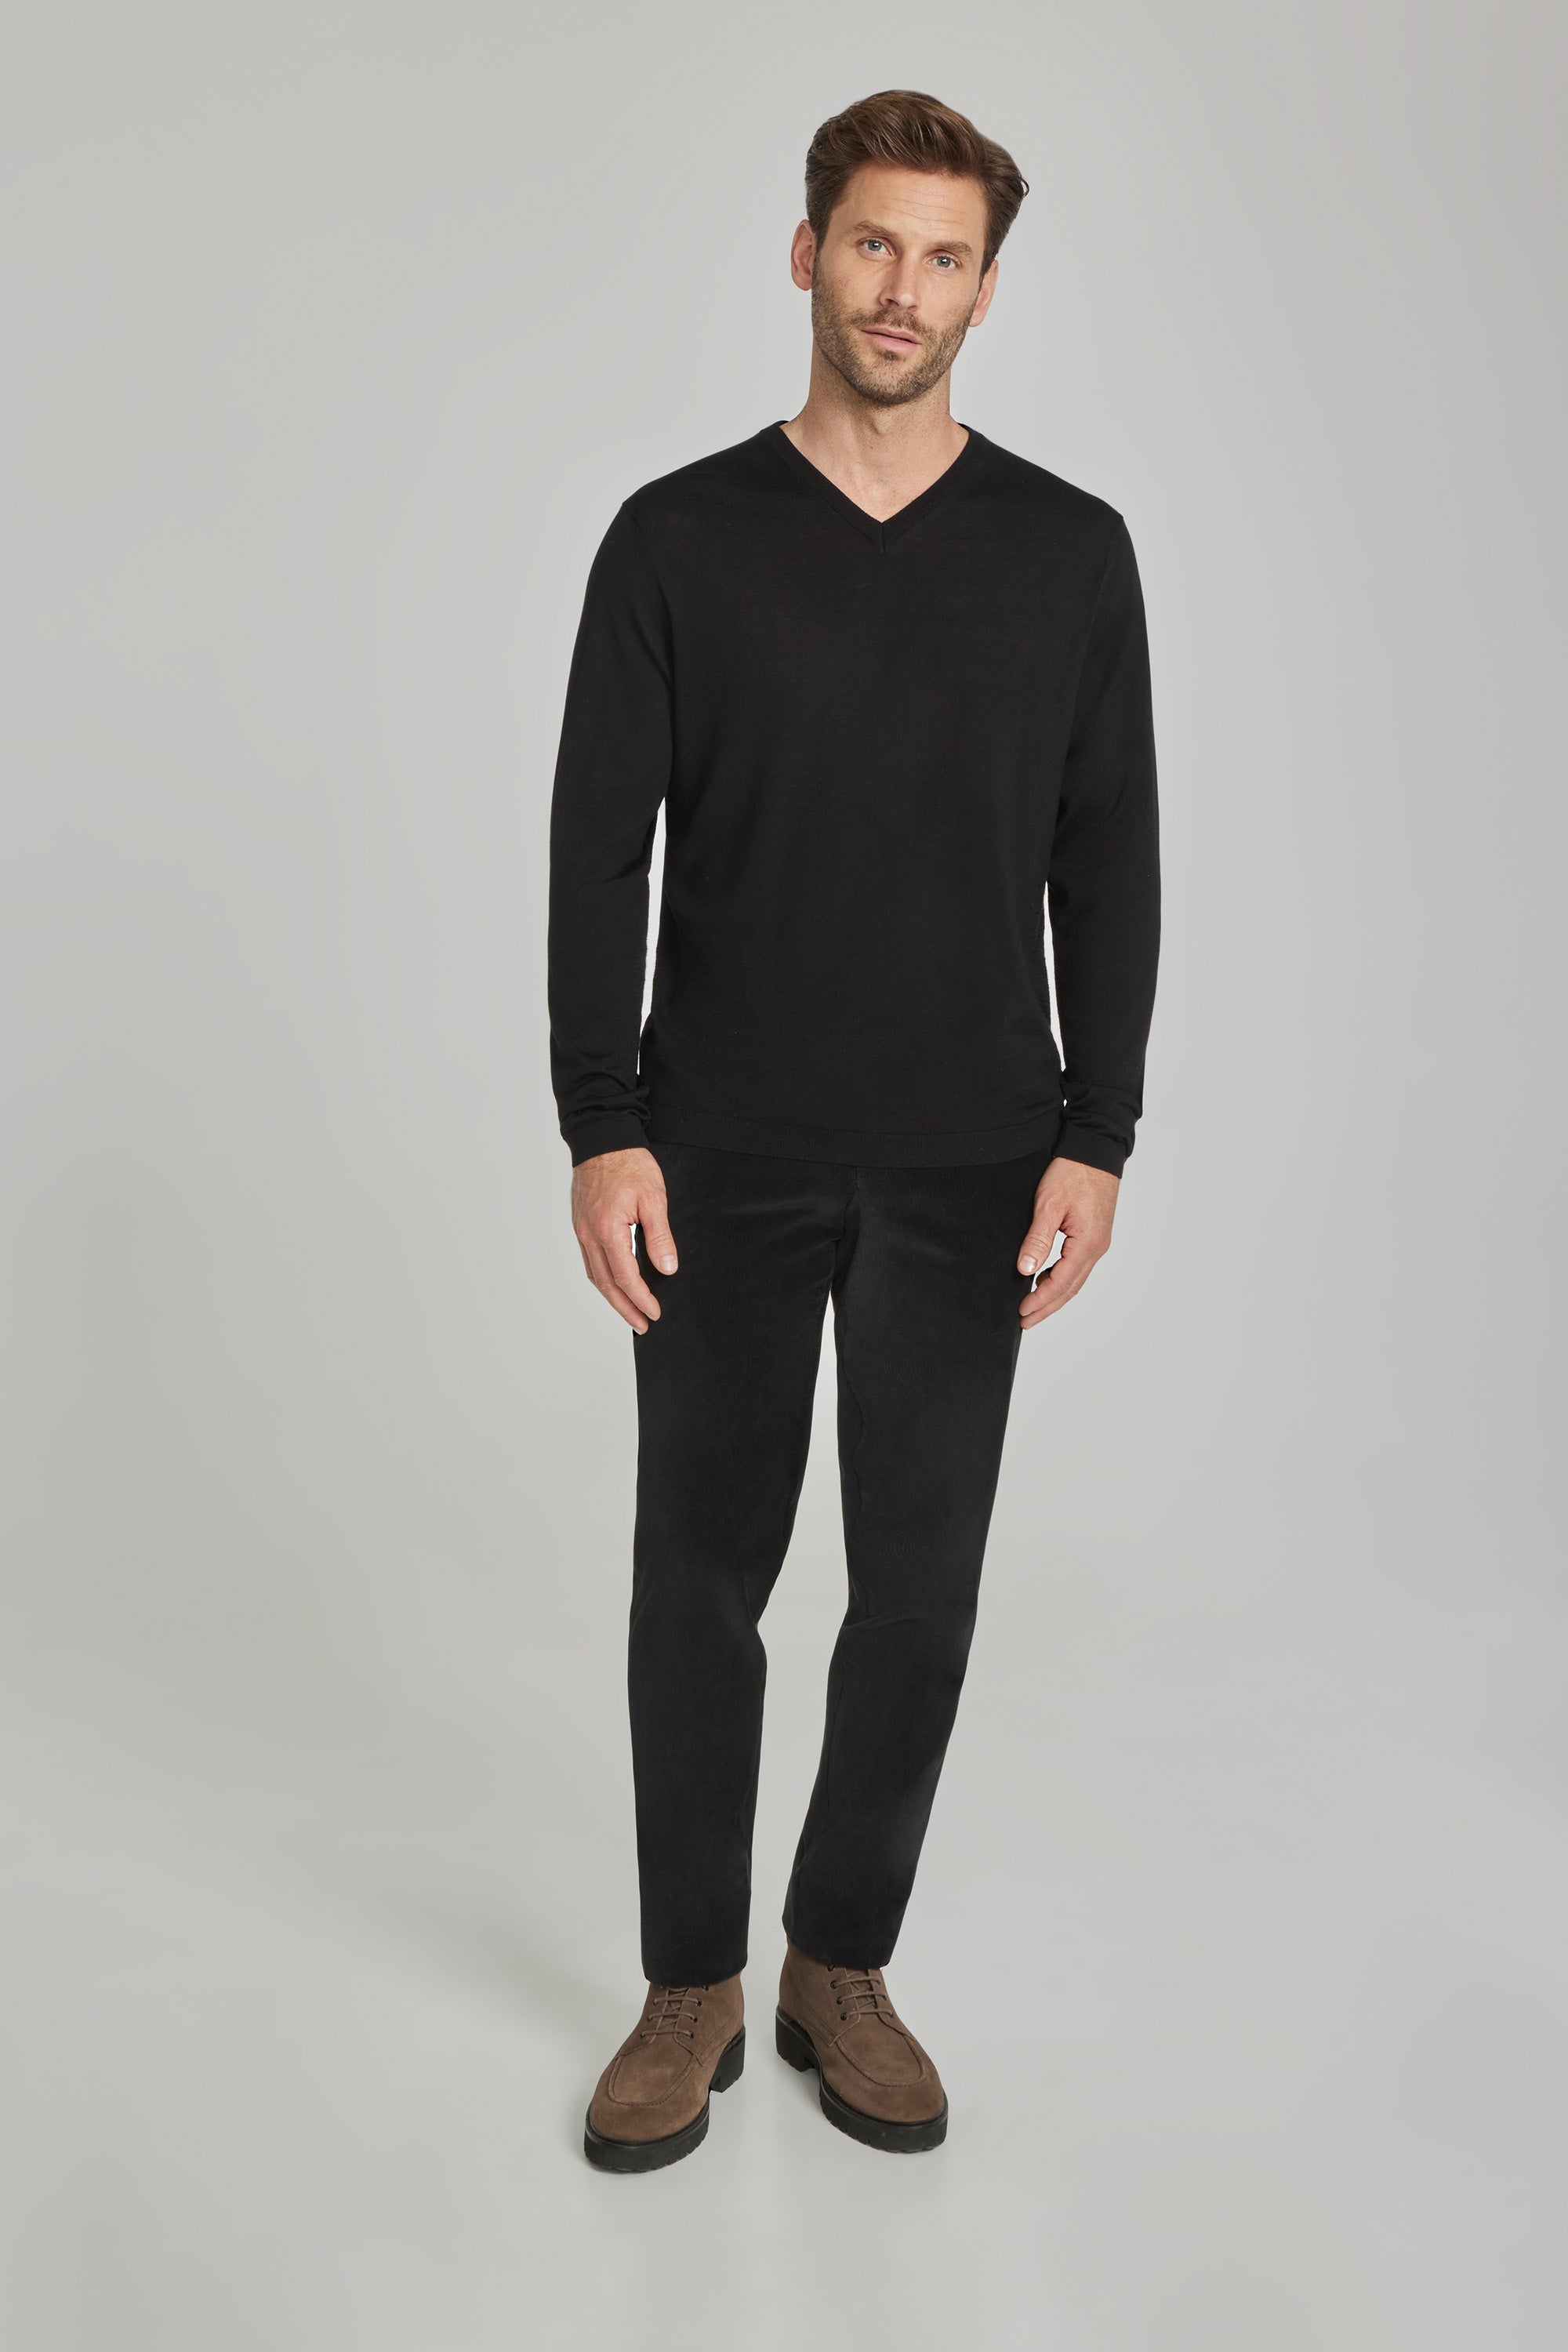 Ramezay Black Wool, Silk and Cashmere V-Neck Sweater